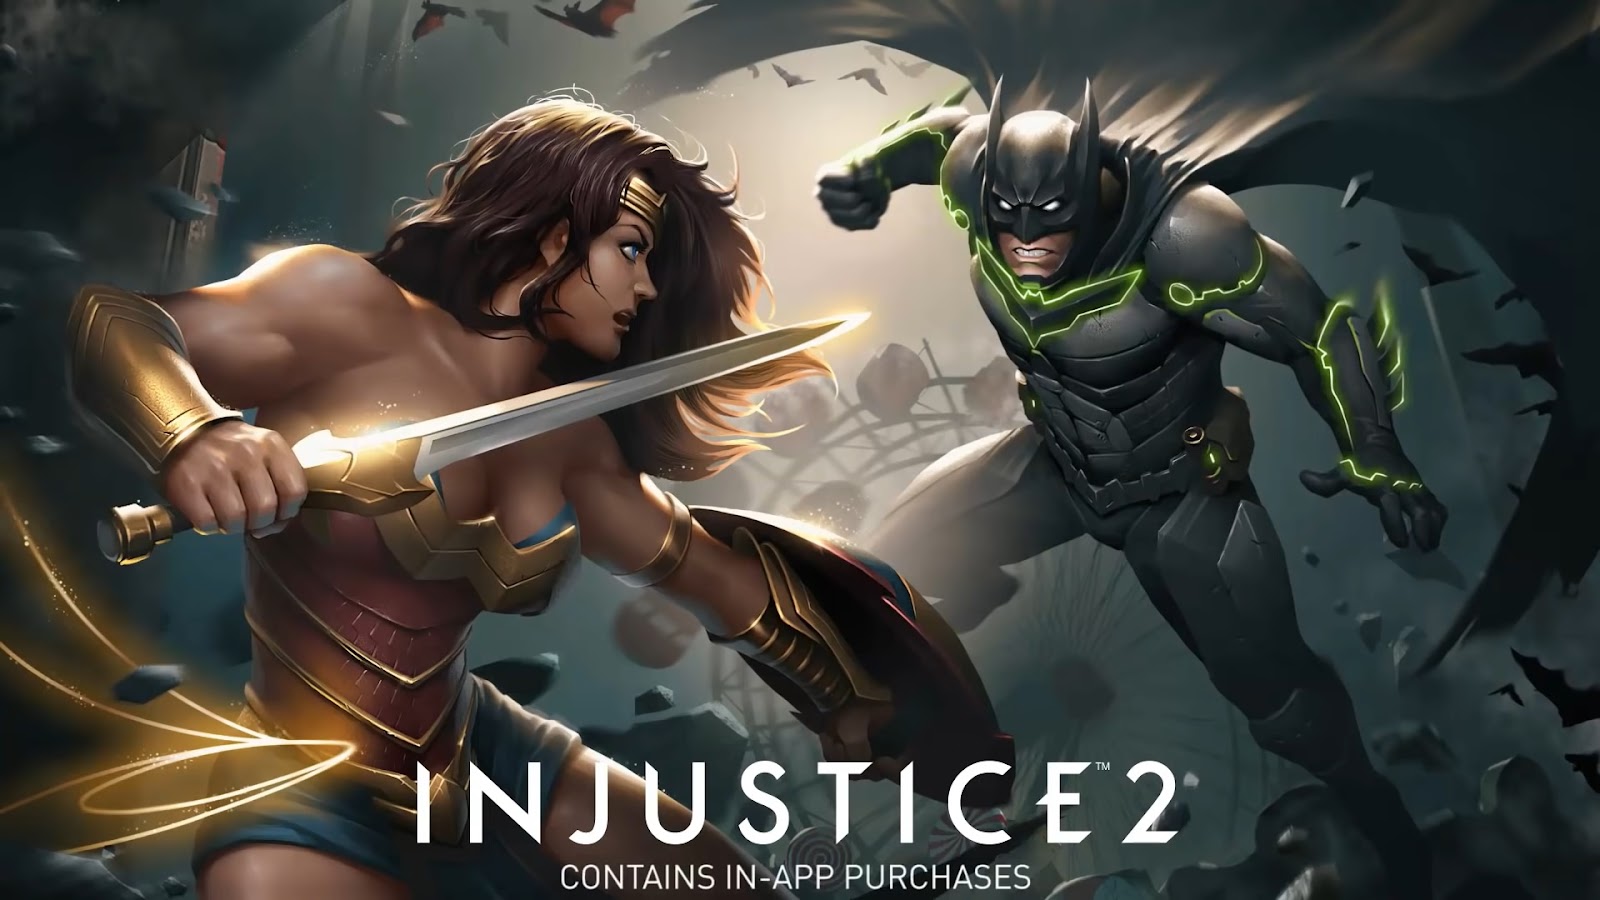 Injustice 2 gameplay trailer